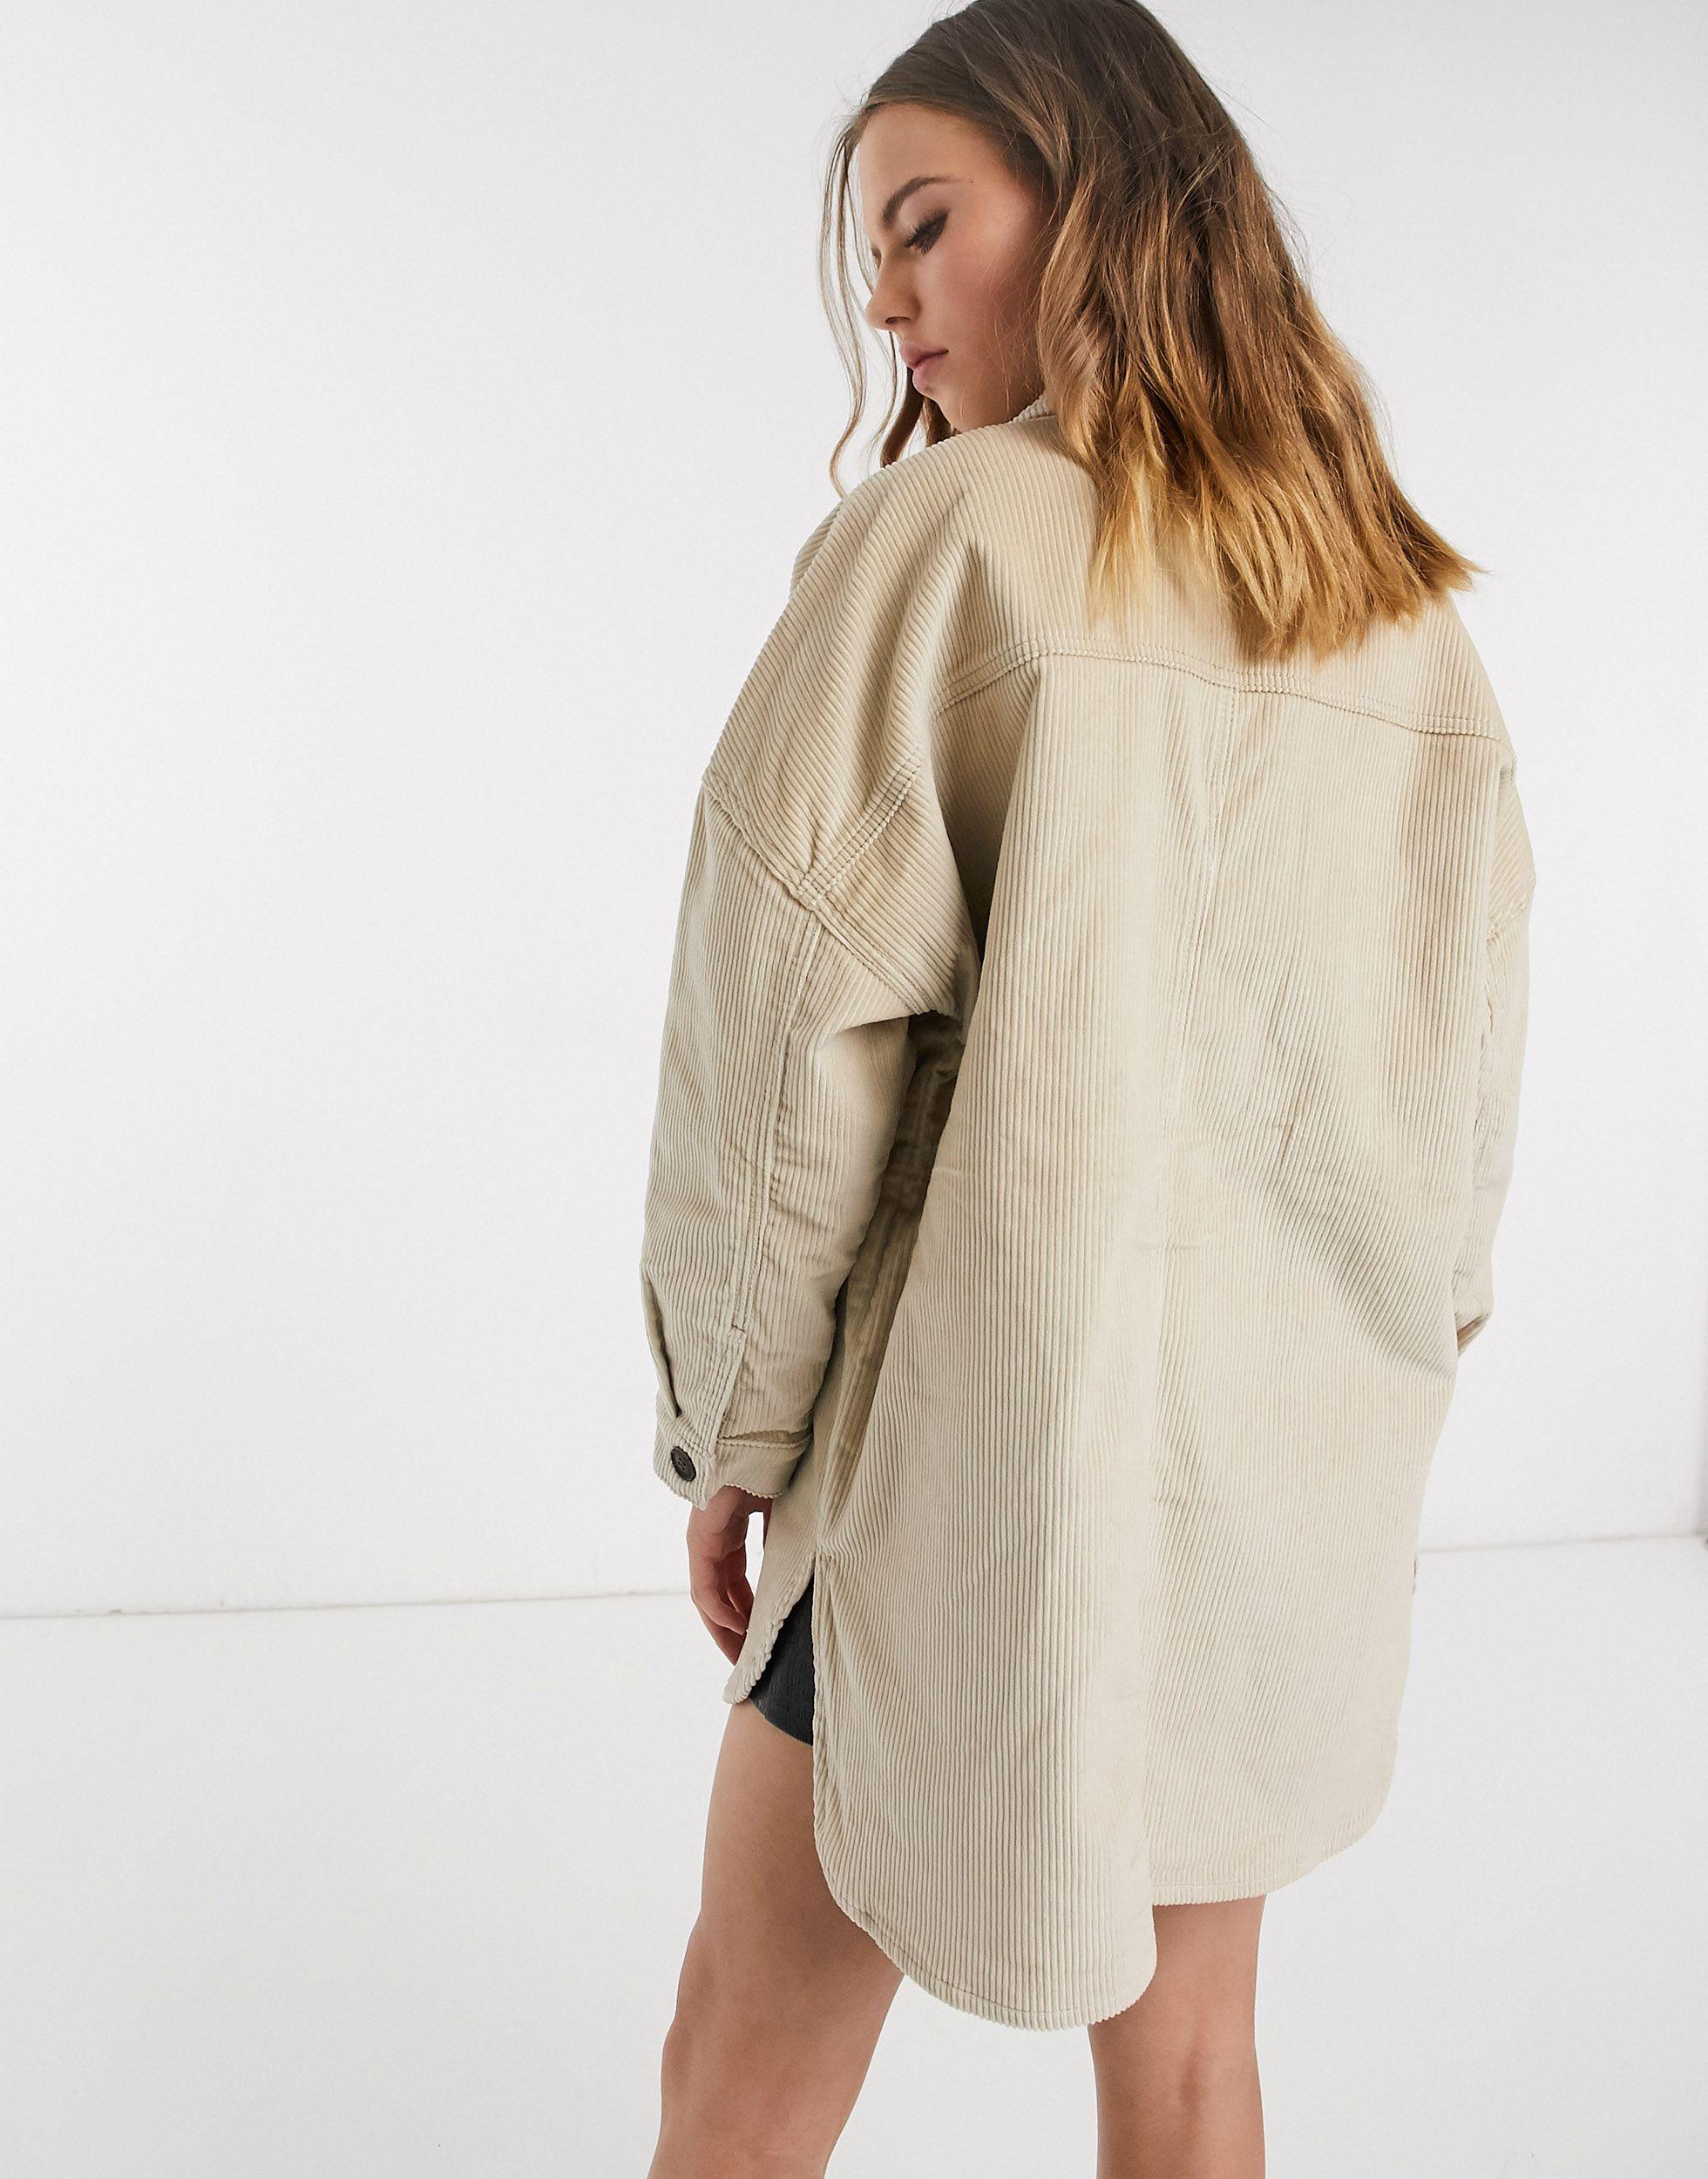 Vero Moda Cotton Longline Cord Jacket in Beige (Natural) - Lyst